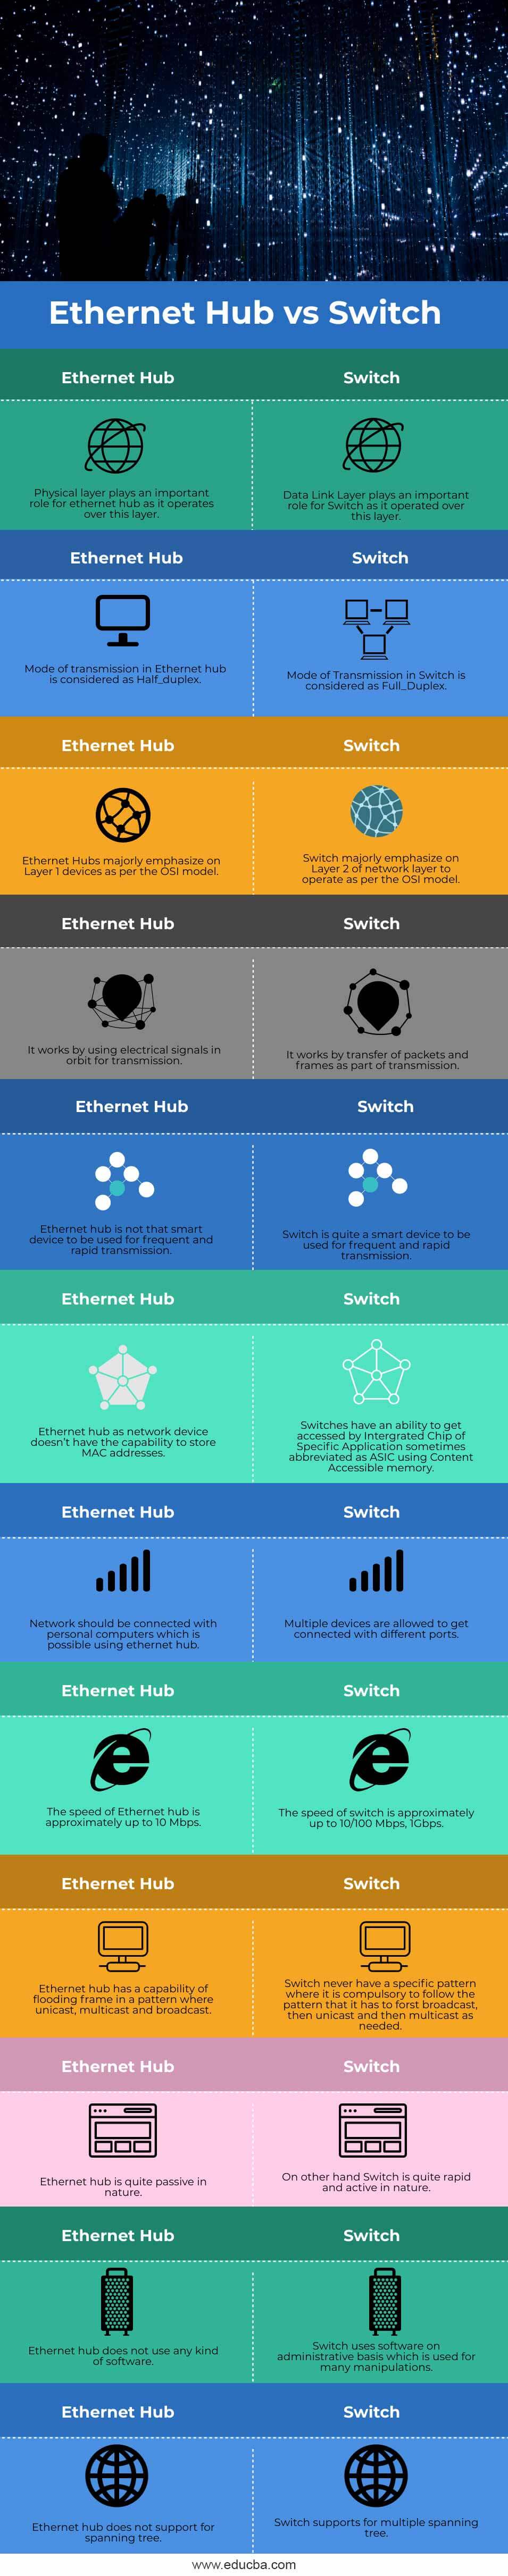 Ethernet-Hub-vs-Switch-info